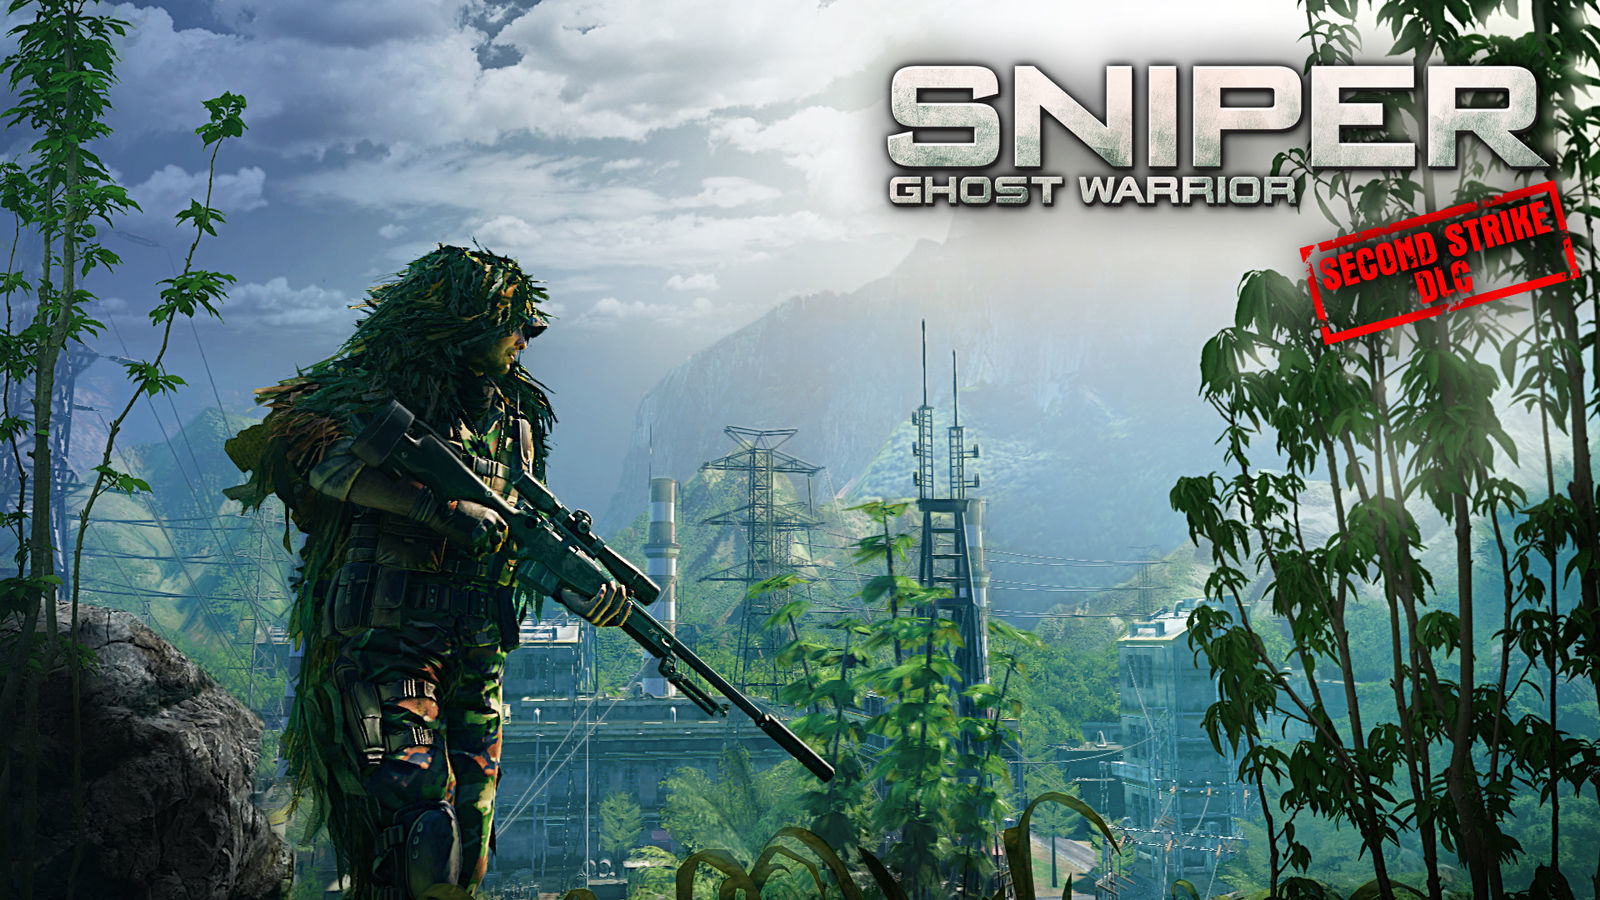 Sniper: Ghost Warrior - Second Strike | wingamestore.com